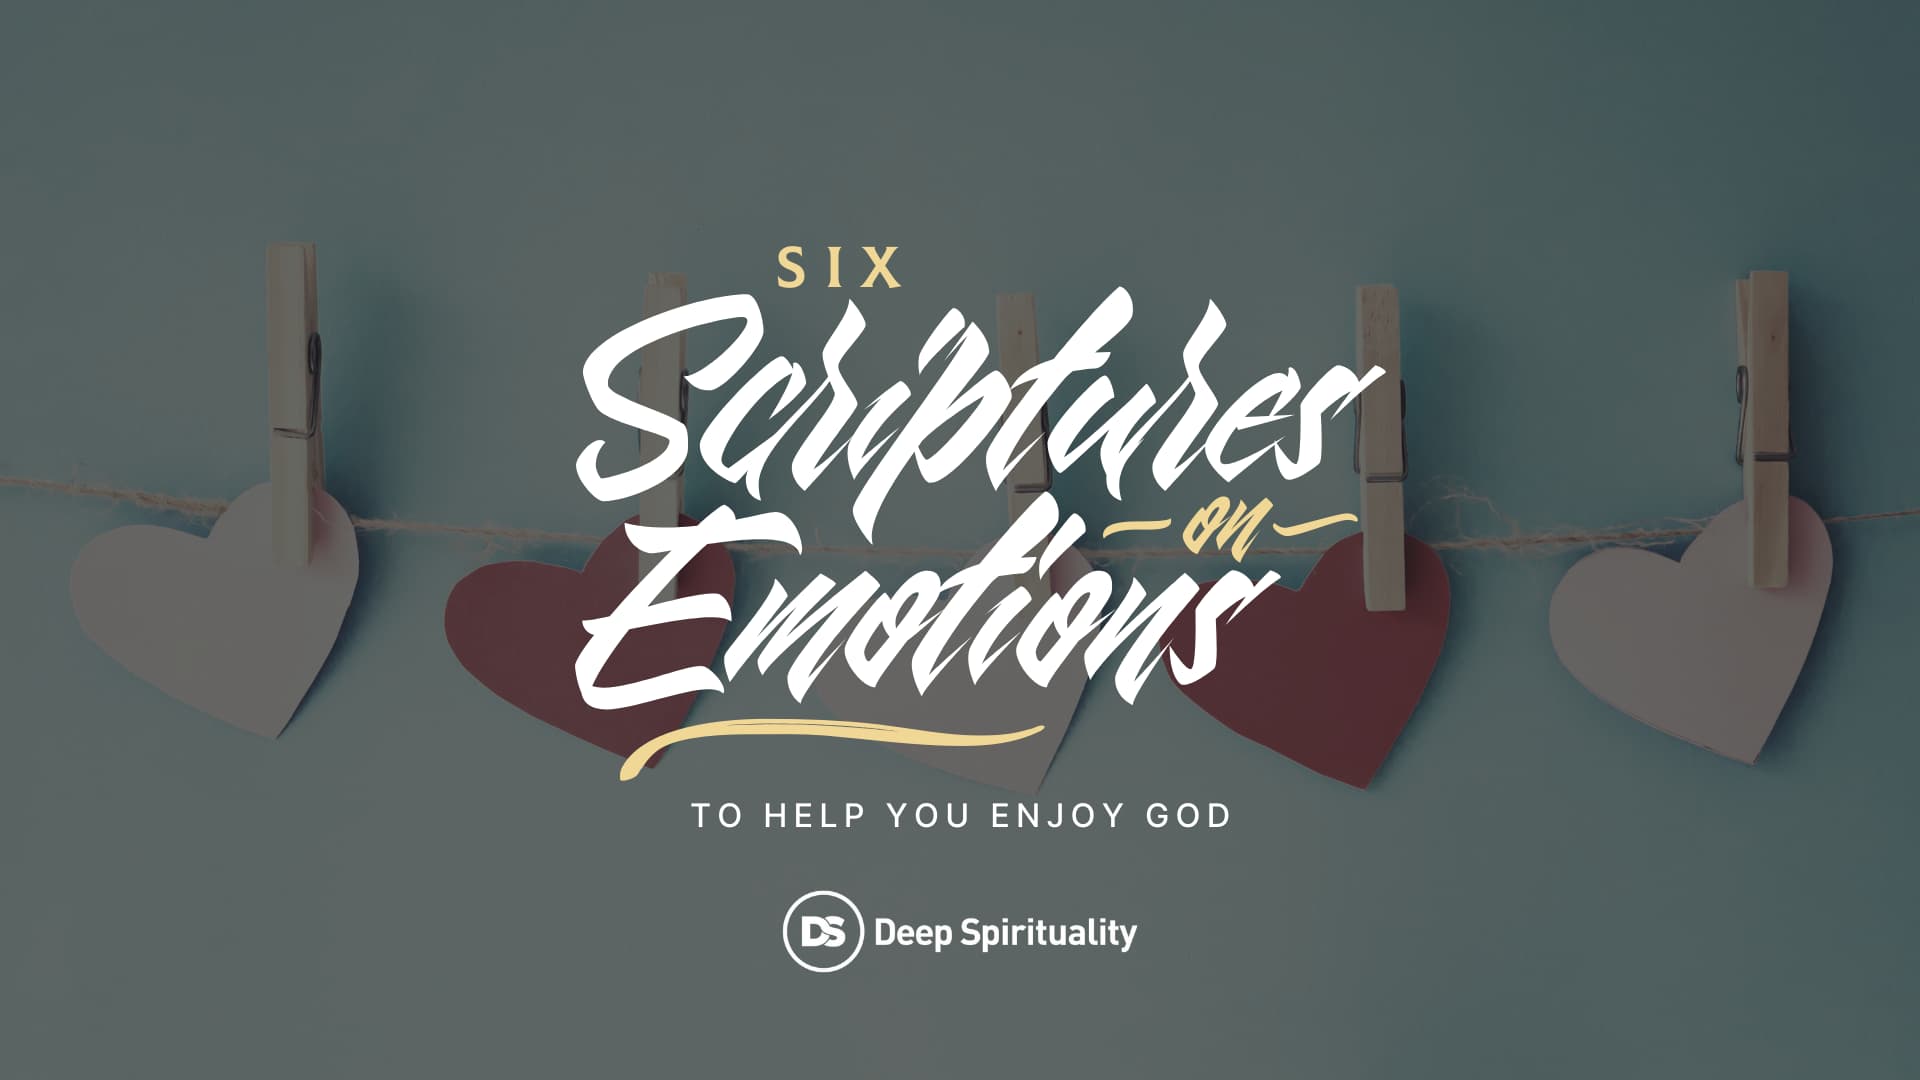 scriptures on emotions